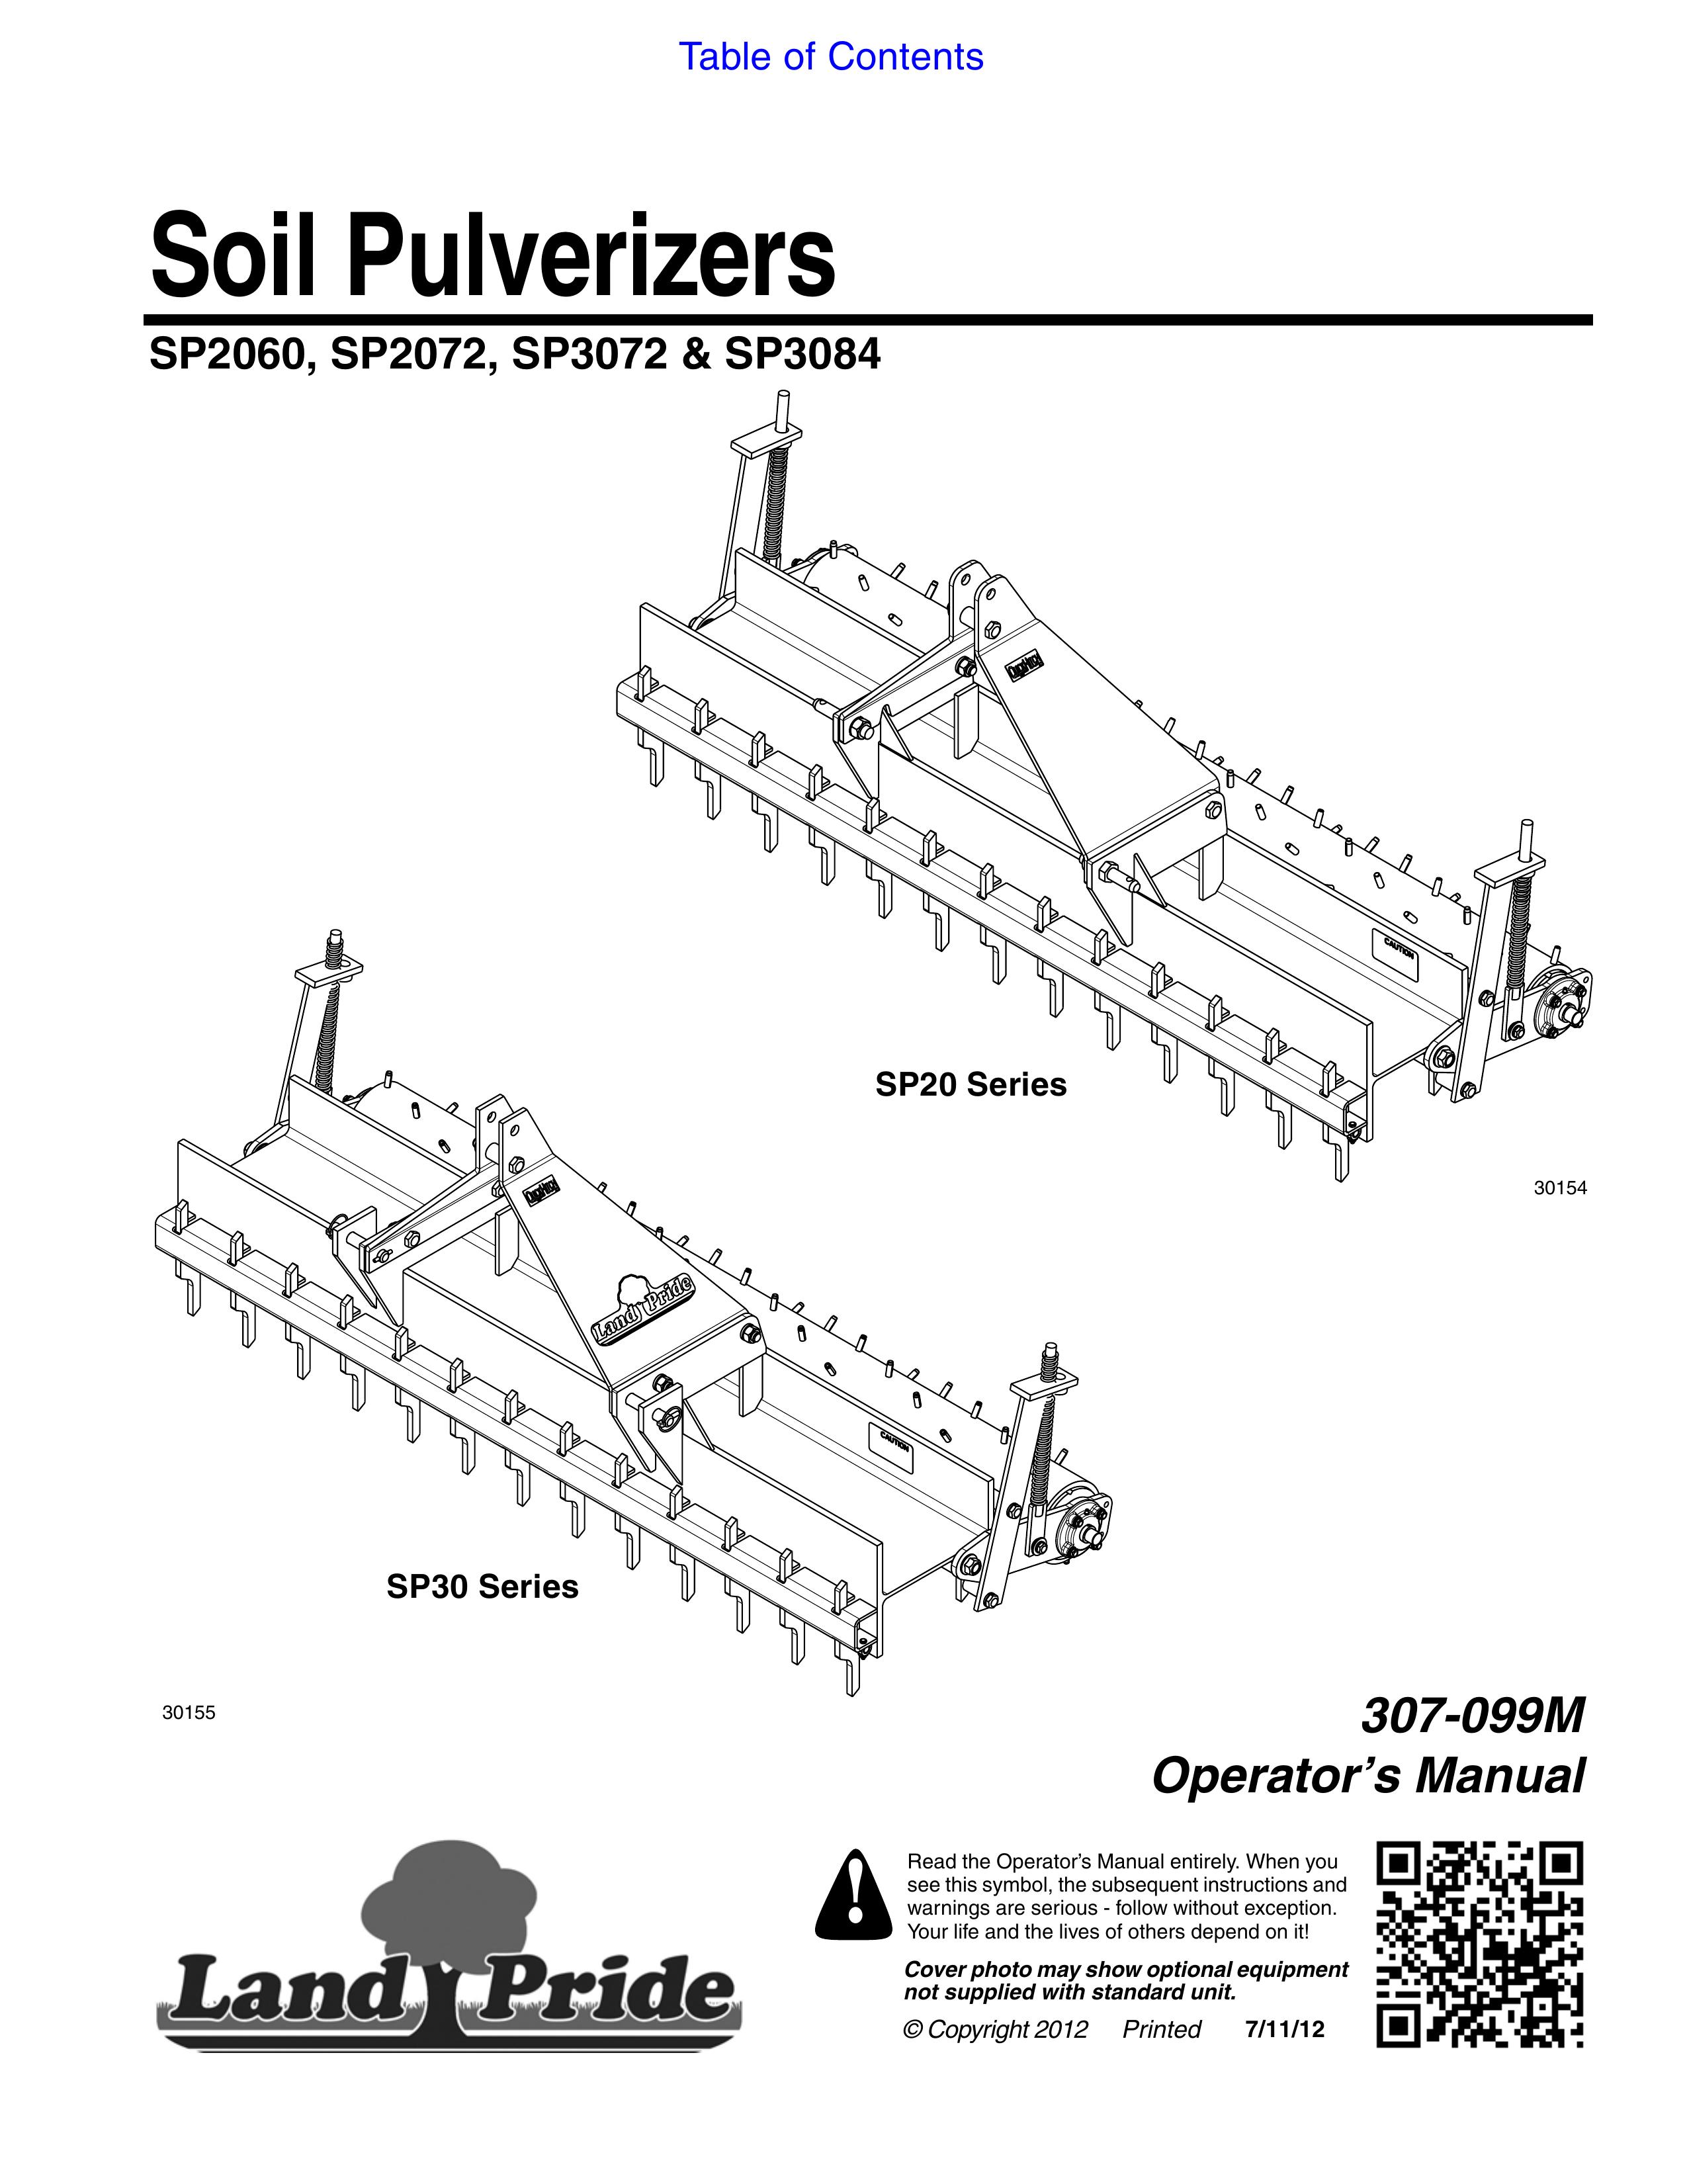 Land Pride SP2072 Lawn Aerator User Manual